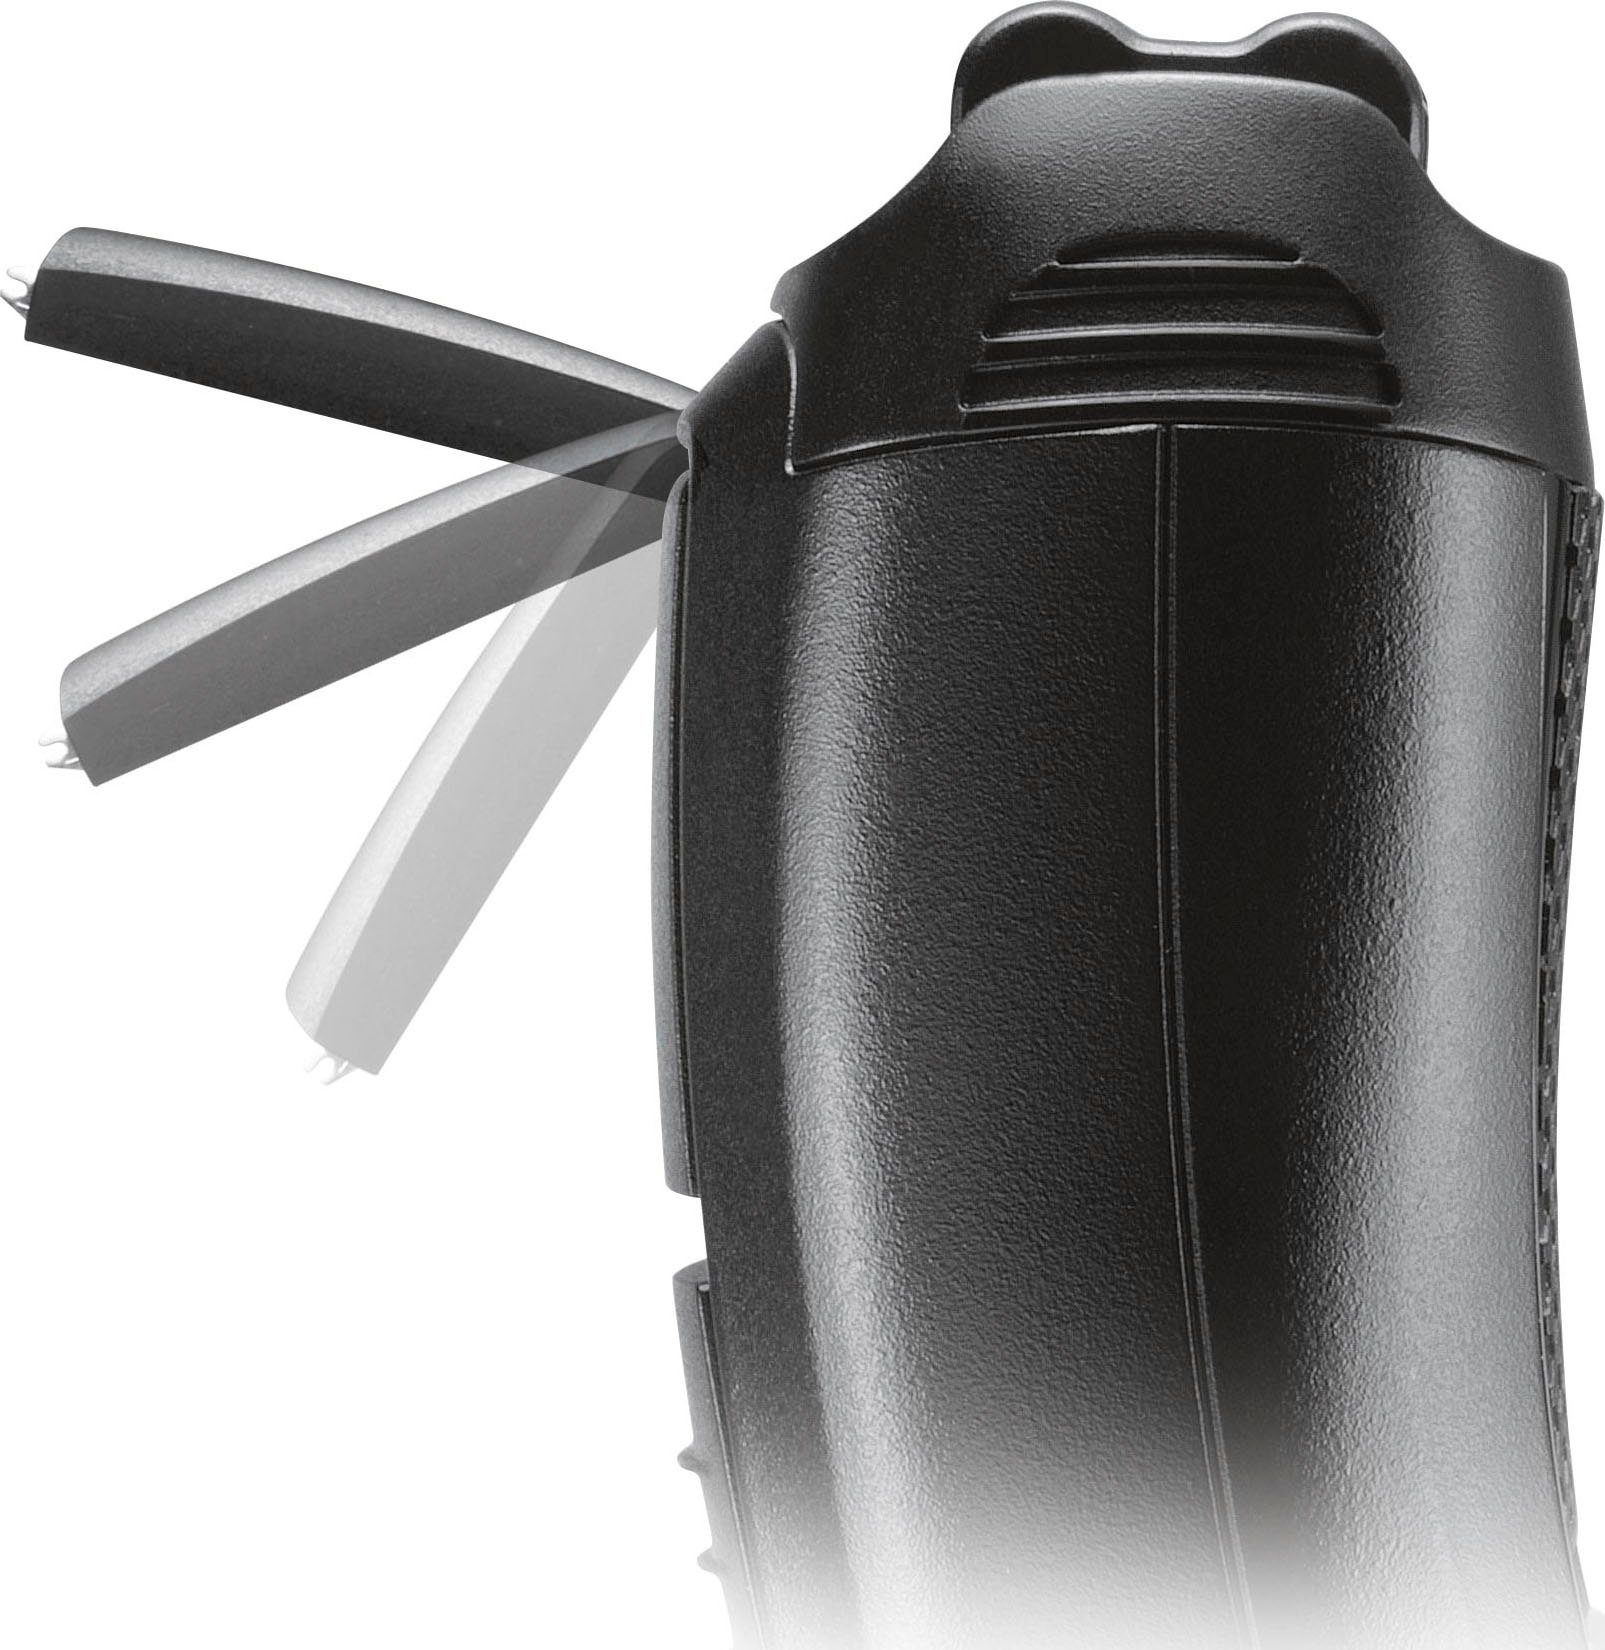 Remington Elektrorasierer Shaver integrierter Foil Style Pop-Up-Trimmer, F2, Präzisionstrimmer, Anzeige, Series LED abwaschbar, F2002 Aufsätze: 1, Präzisionstrimmer